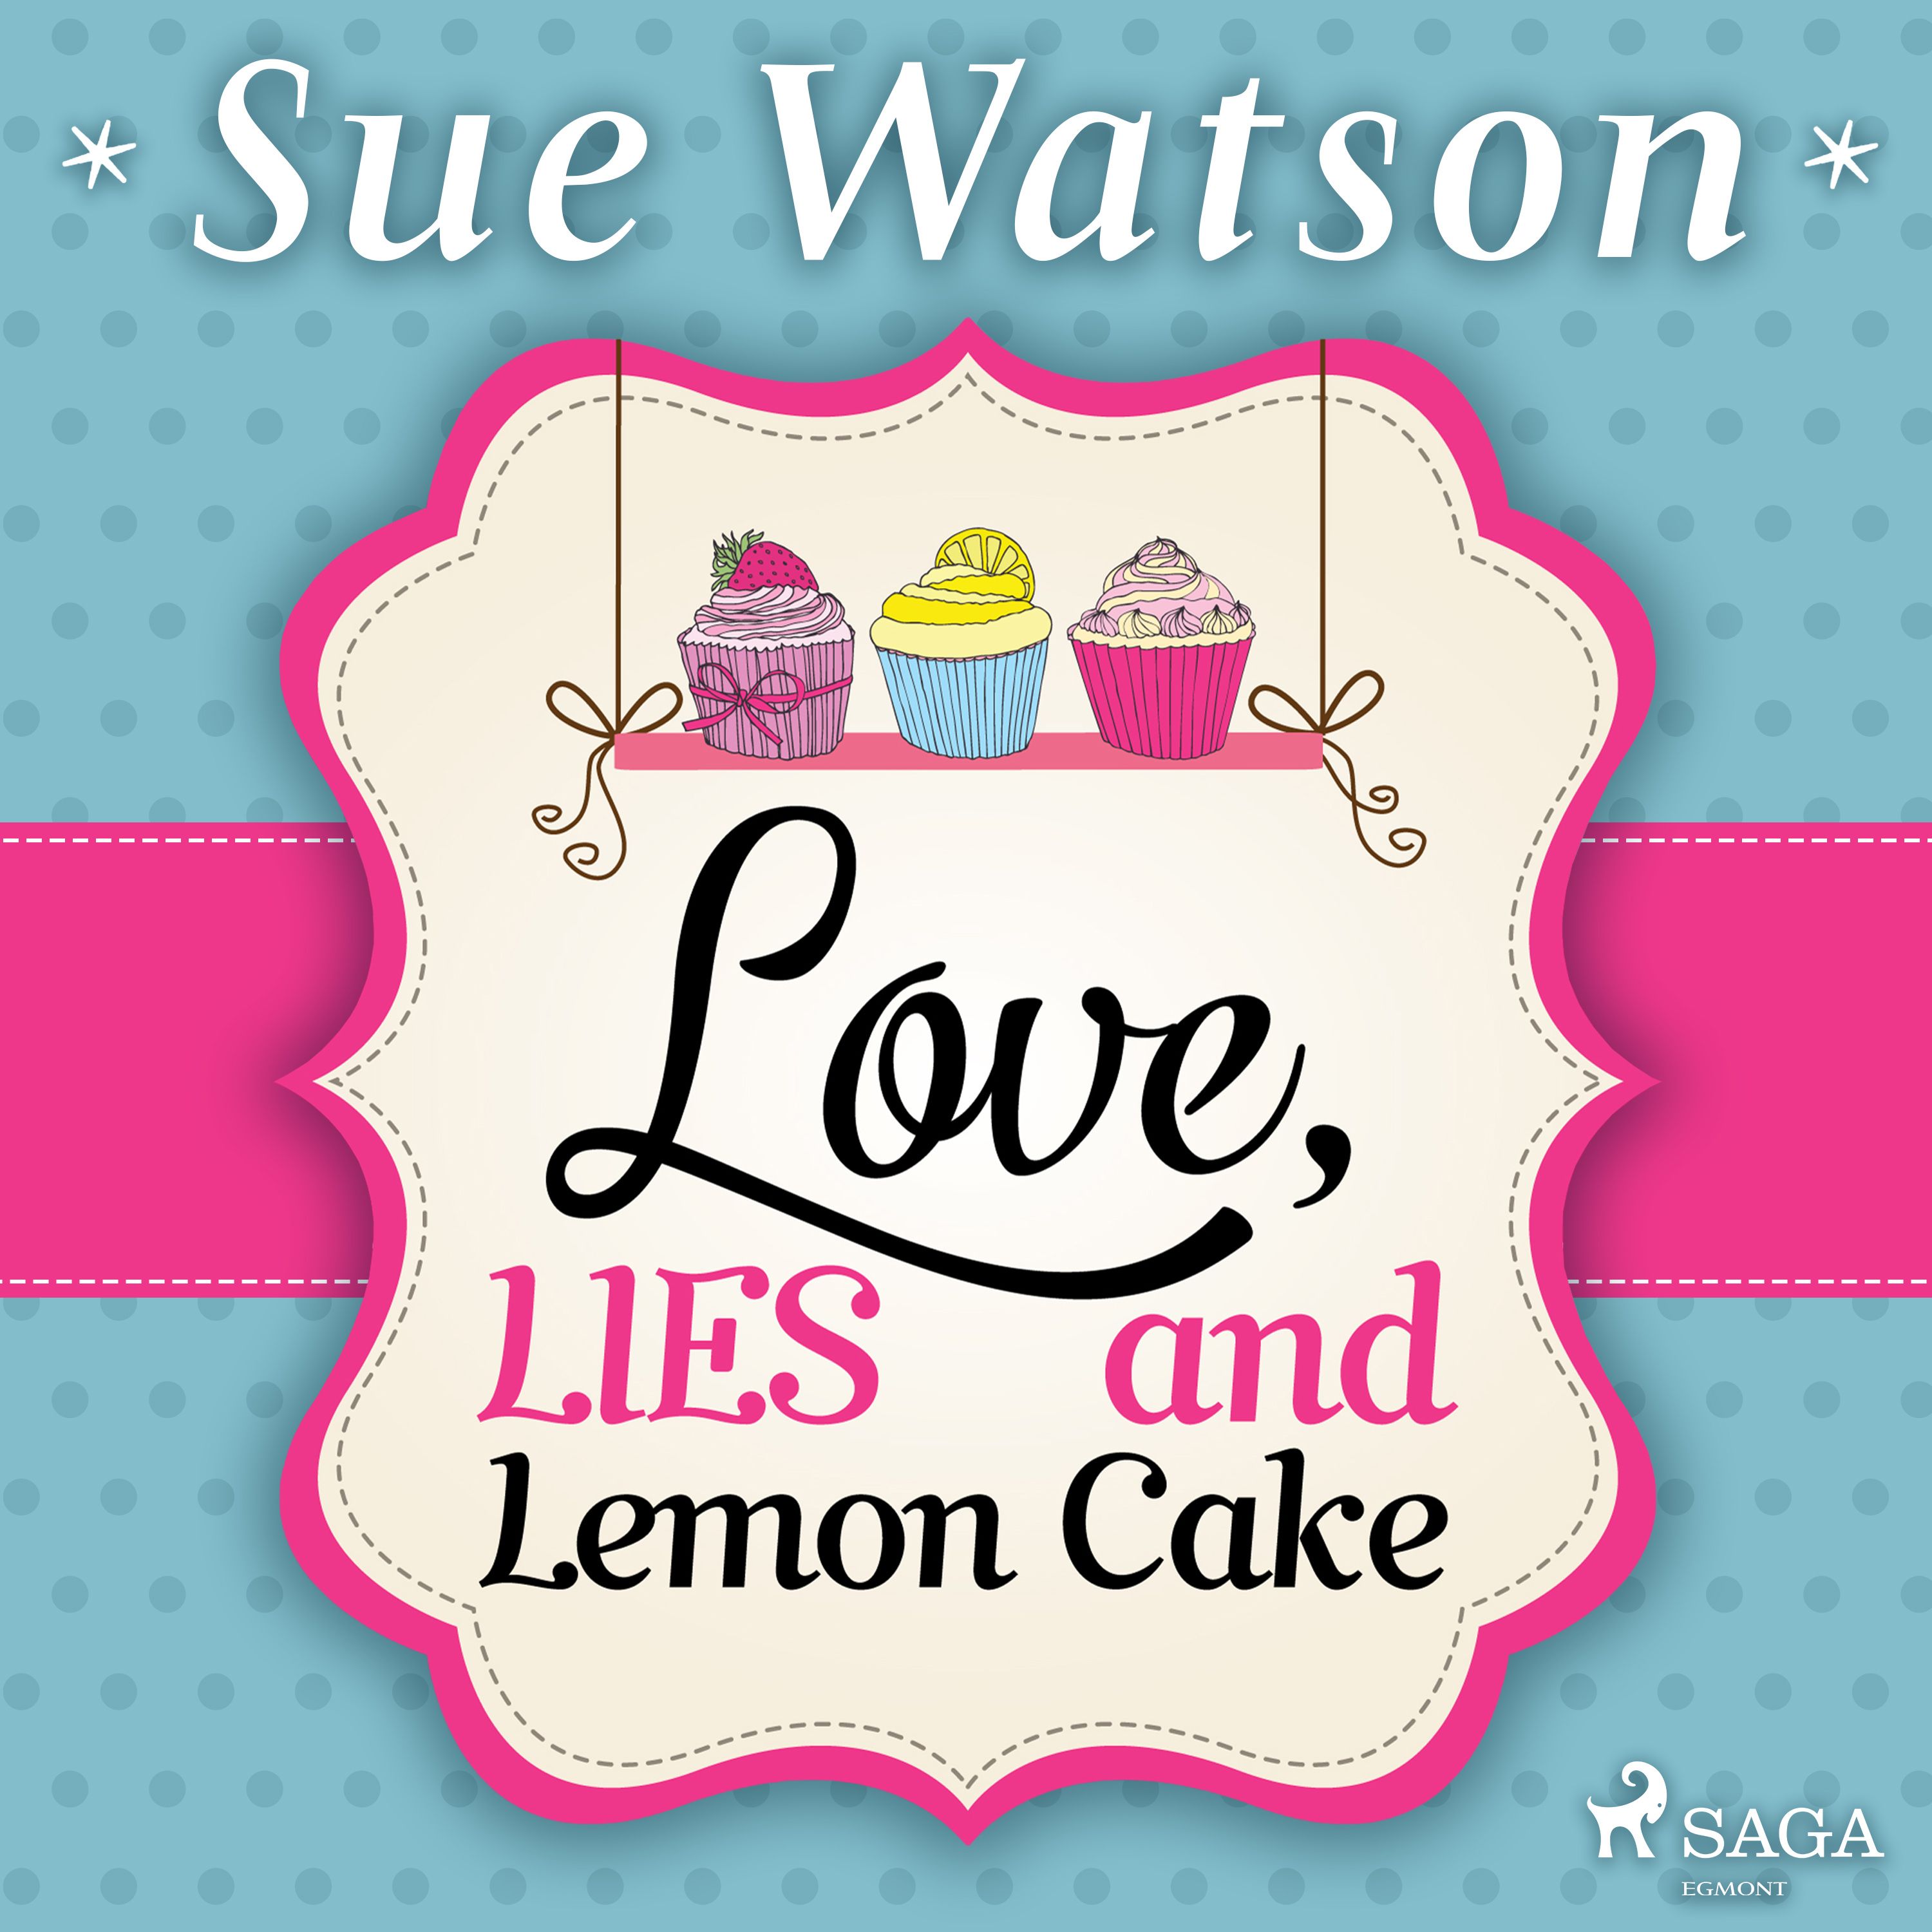 Love, Lies and Lemon Cake, ljudbok av Sue Watson